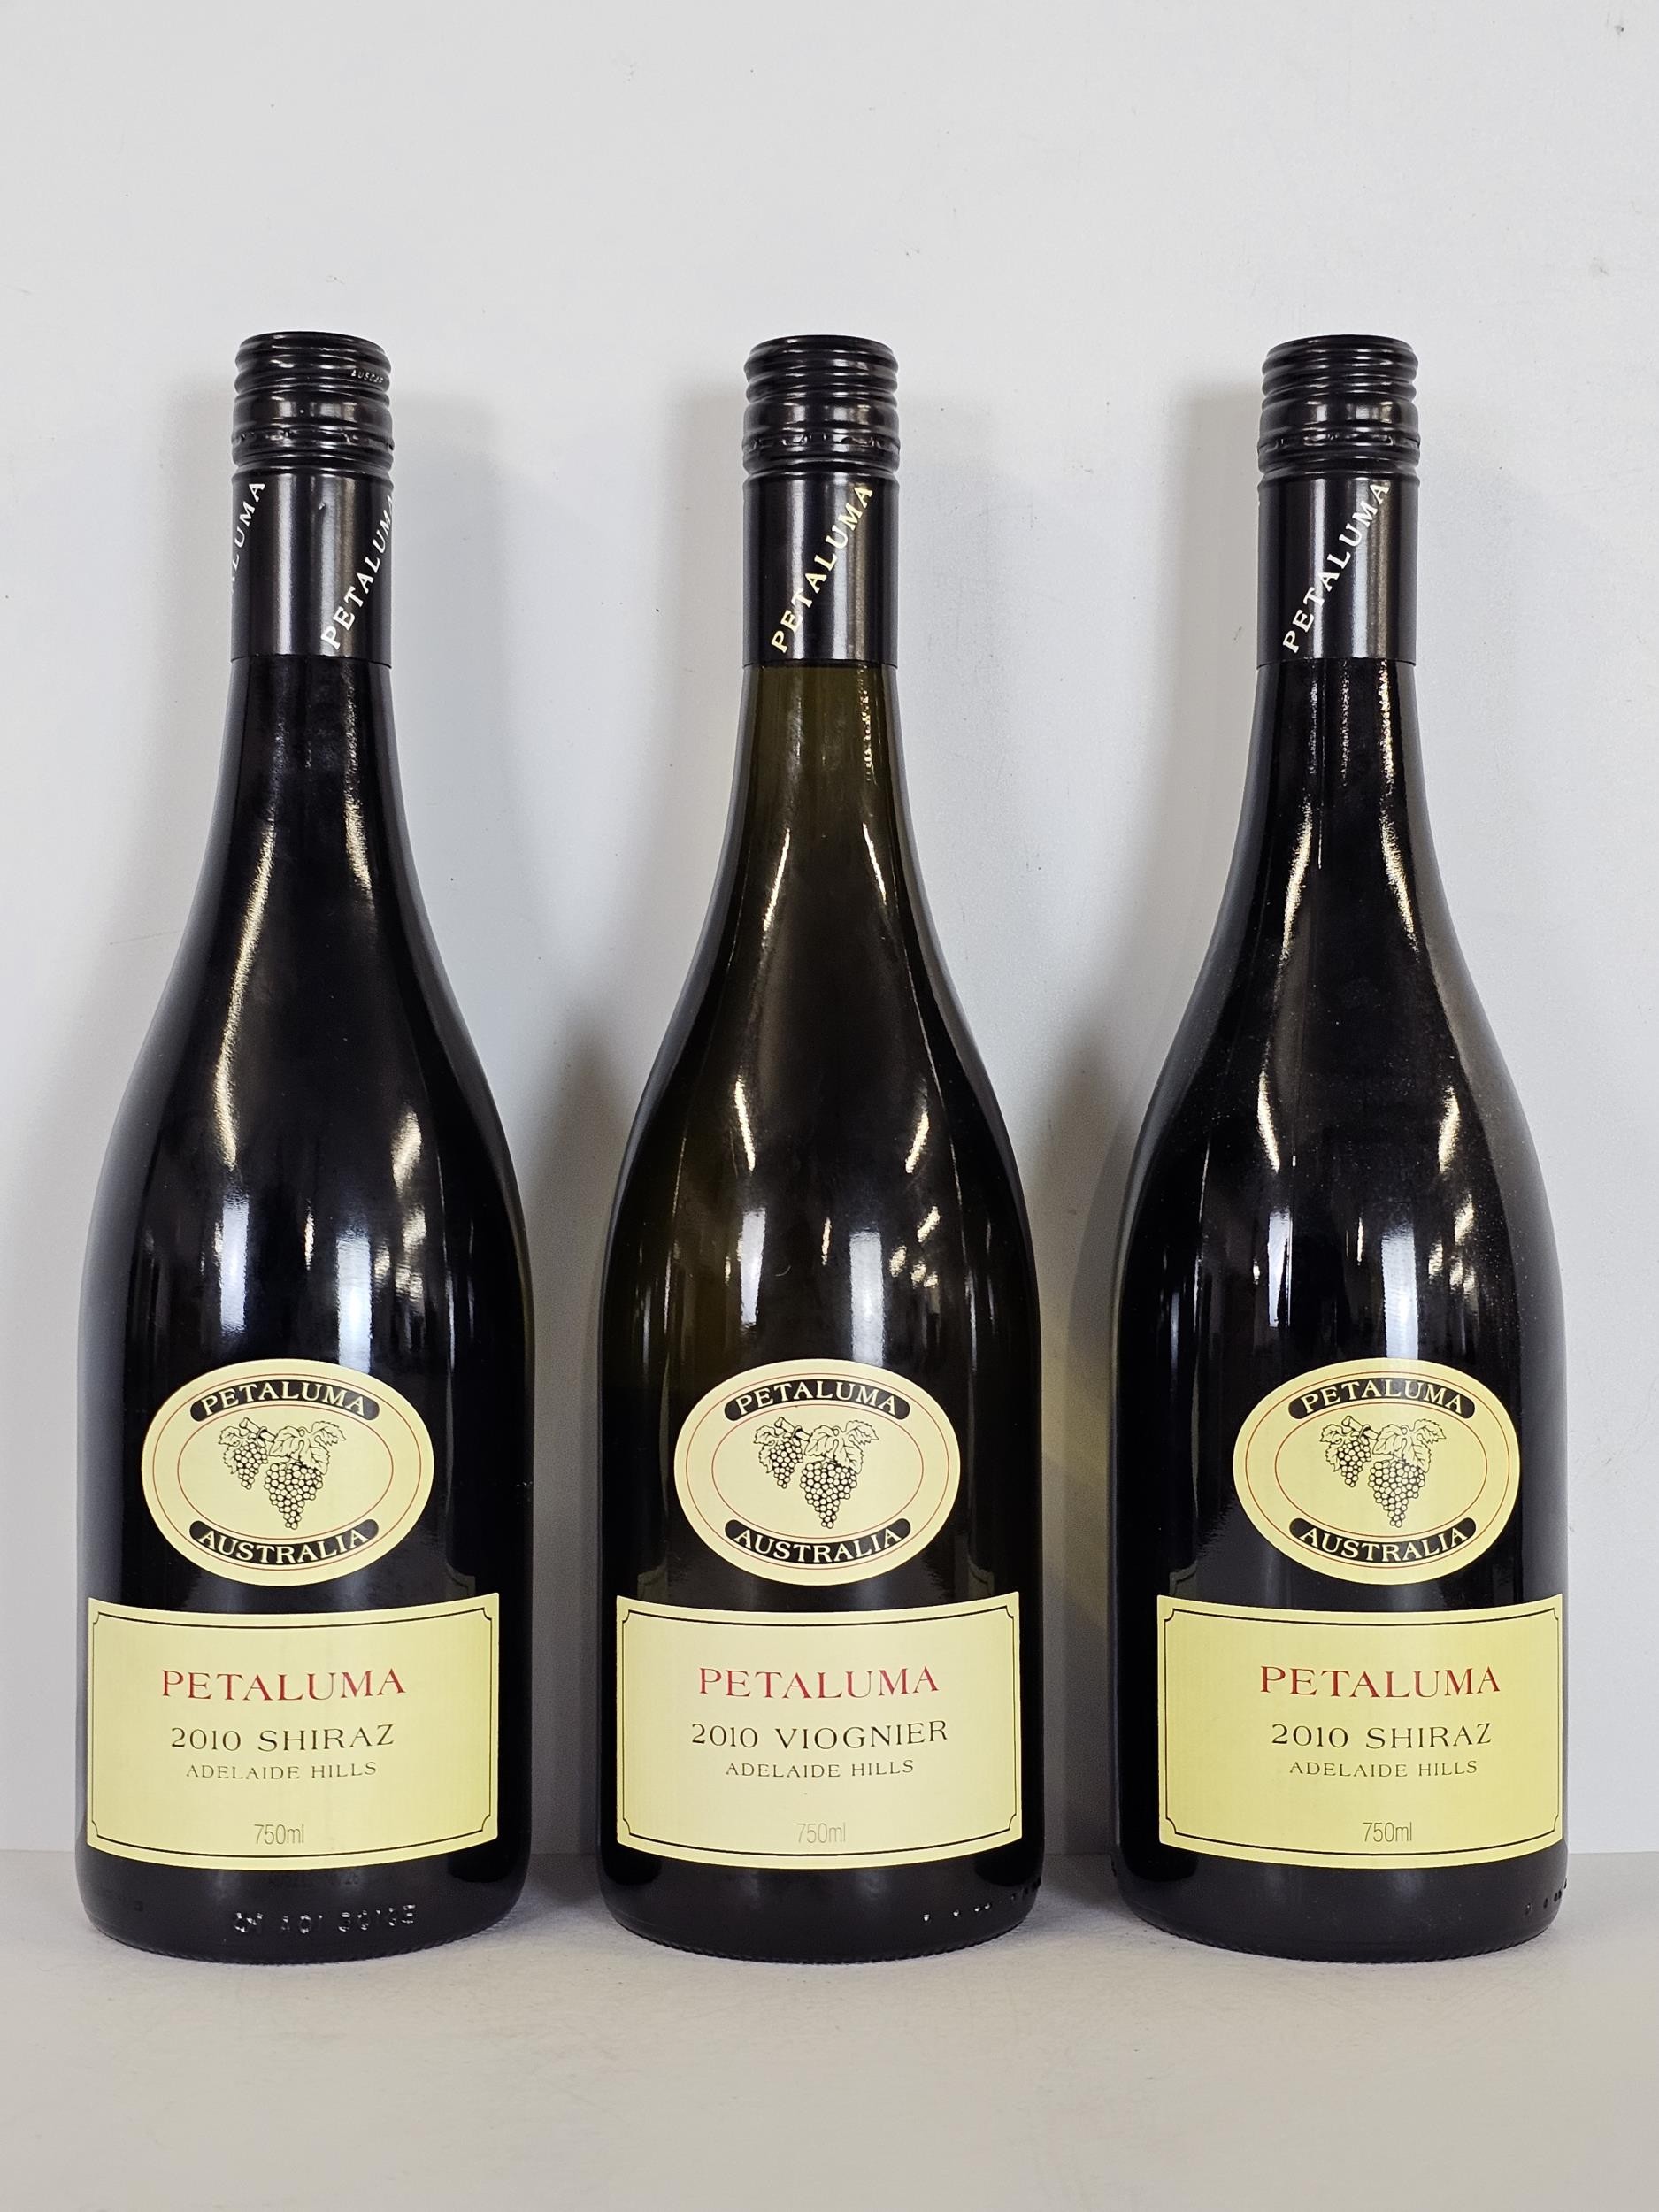 2010 Petaluma Viognier, Adelaide Hills, Australia and two bottles of 2010 Petaluma Shiraz,